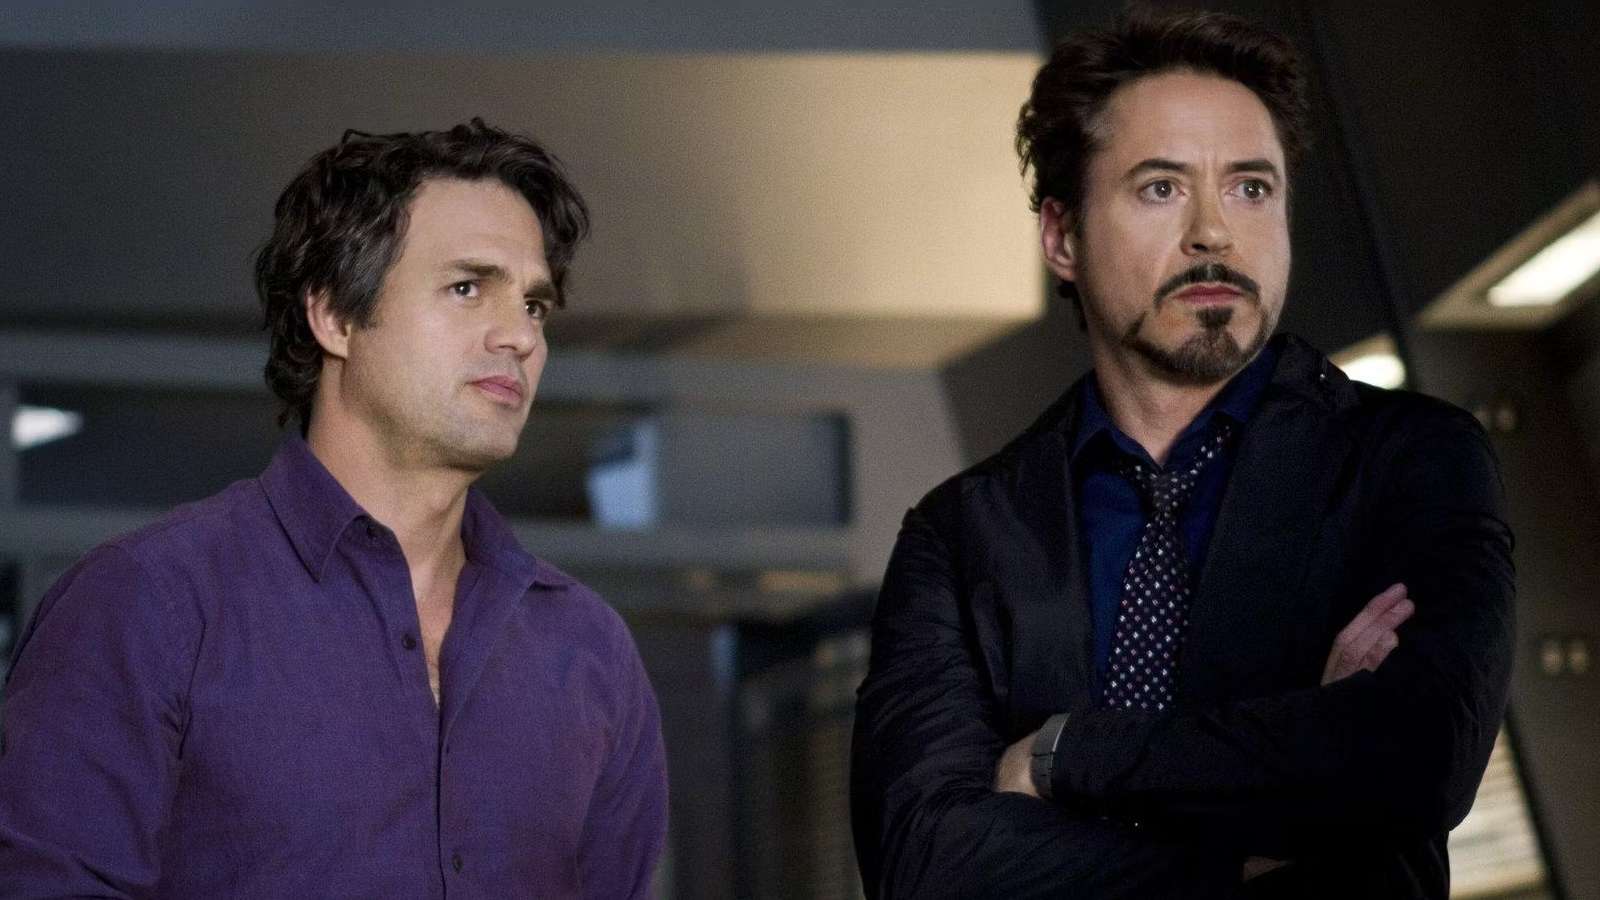 Robert Downey Jr as Tony Stark and Mark Ruffalo as Bruce Banner in the MCU